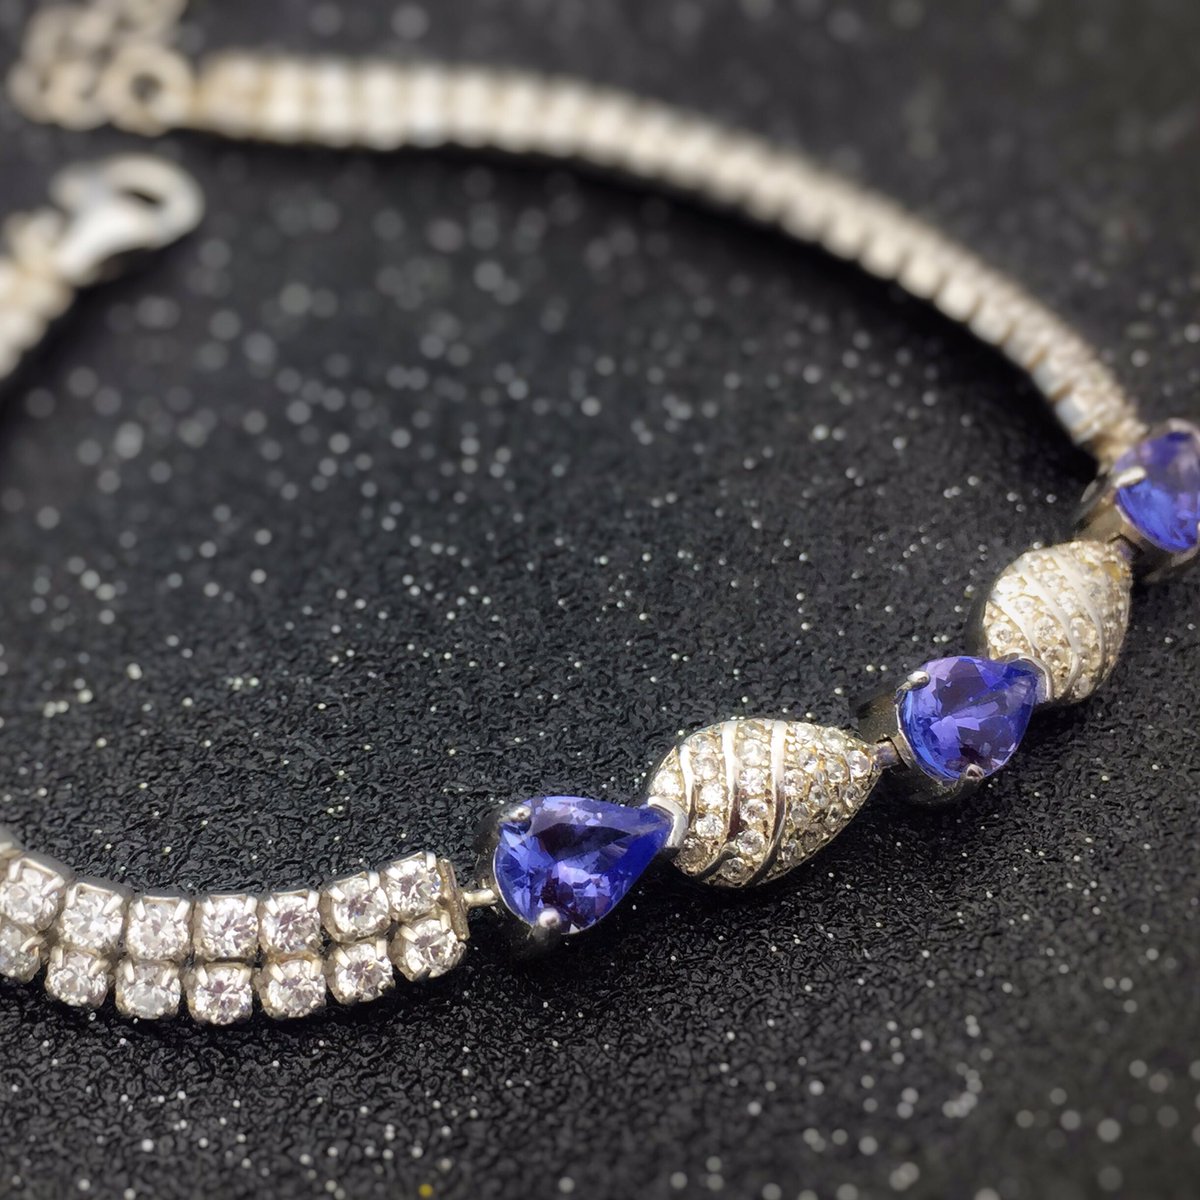 New simple 1.5carat pear cut Tanzanite bracelet. Crafted in silver..
#bracelets #pearcut #tanzanite #gemstonejewelry #braceletsofinstagram #giftideas #fashion #jewelrymaking #jewelryforsale #silverjewelry #sterlingsilverjewelry #925silverjewellery #braceletfashion